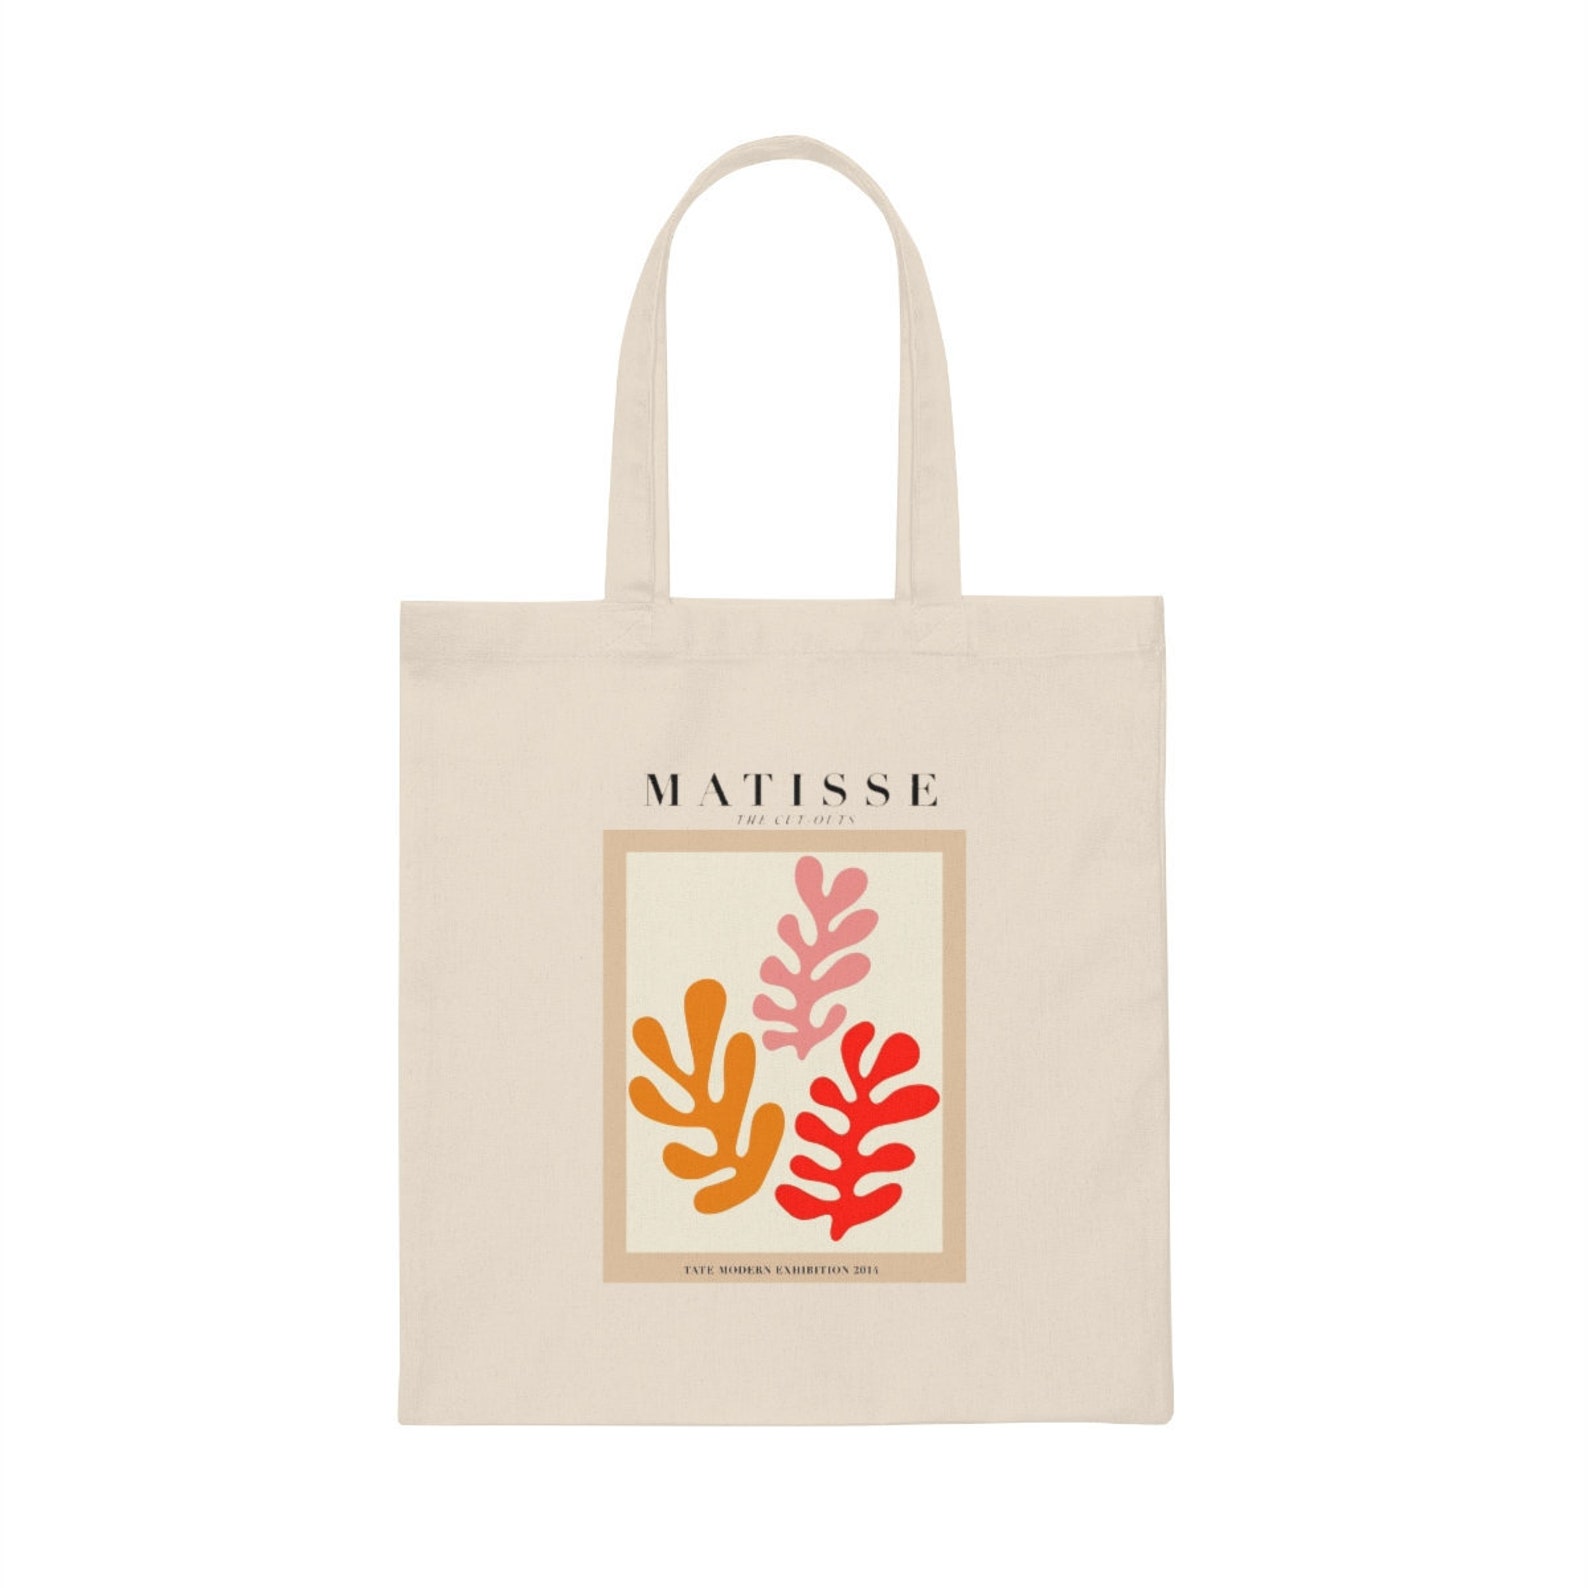 Henri Matisse Cut Out Tate Modern Tote Bag Cotton Tote Bag | Etsy